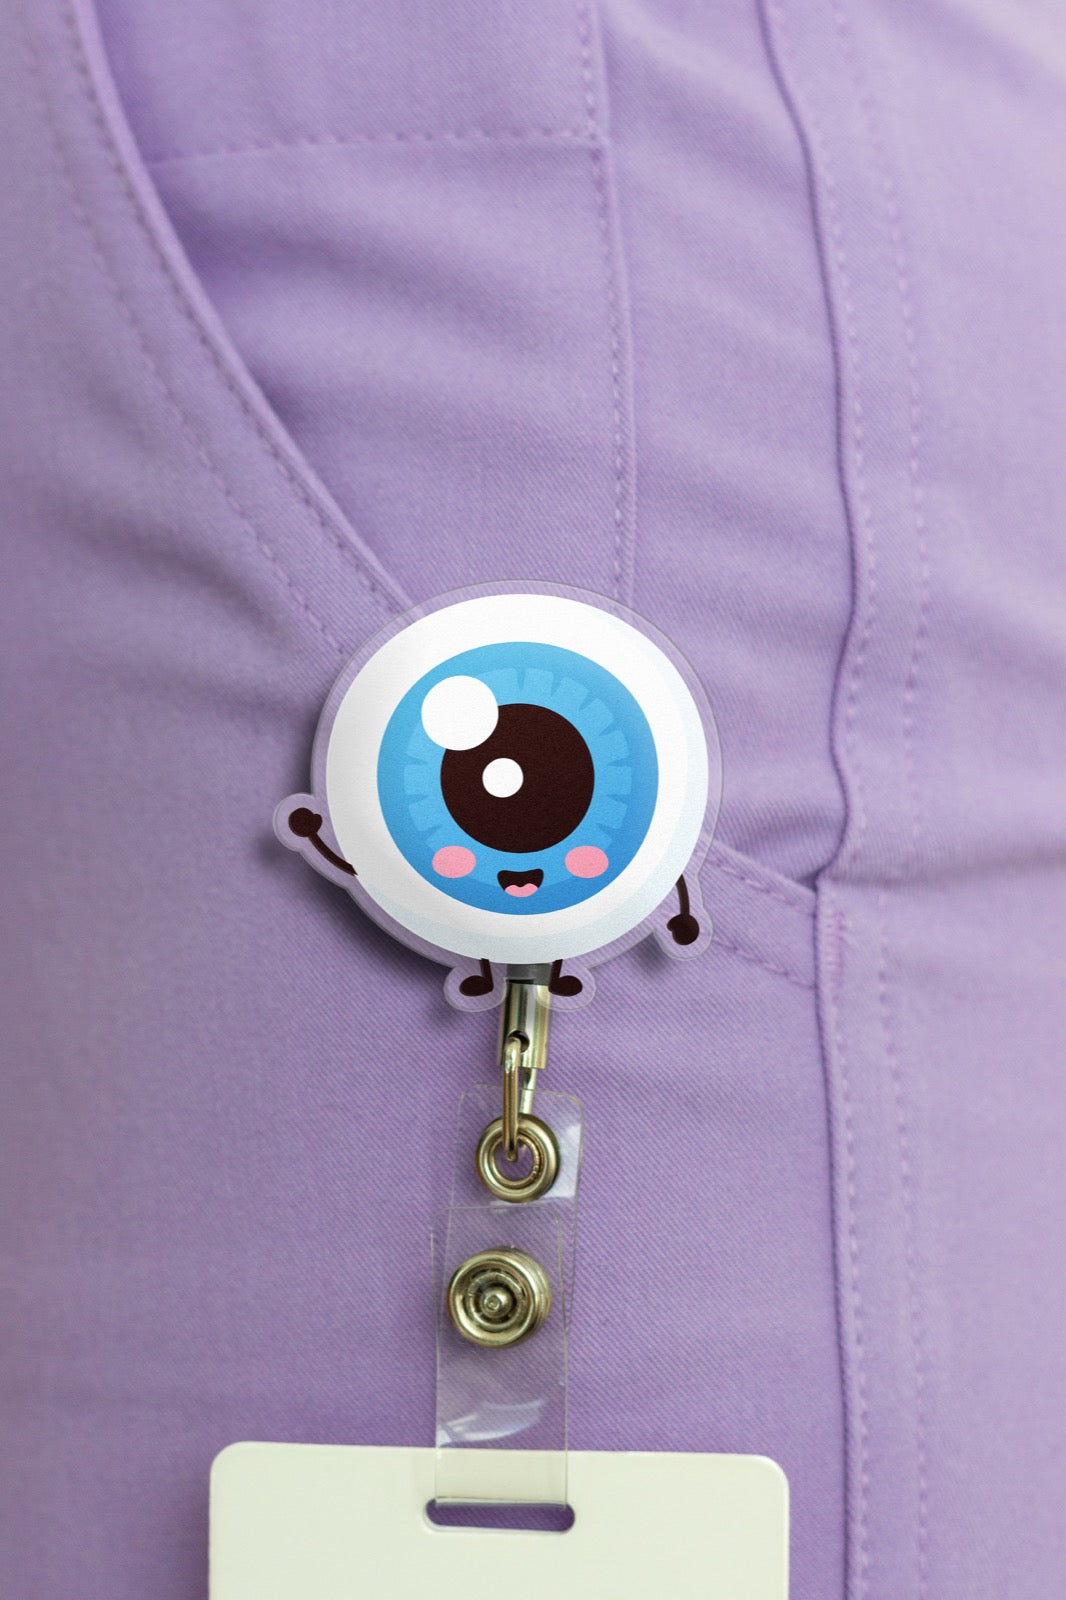  Anatomical Eye Reel - Medical Badge Holder - Eyeball